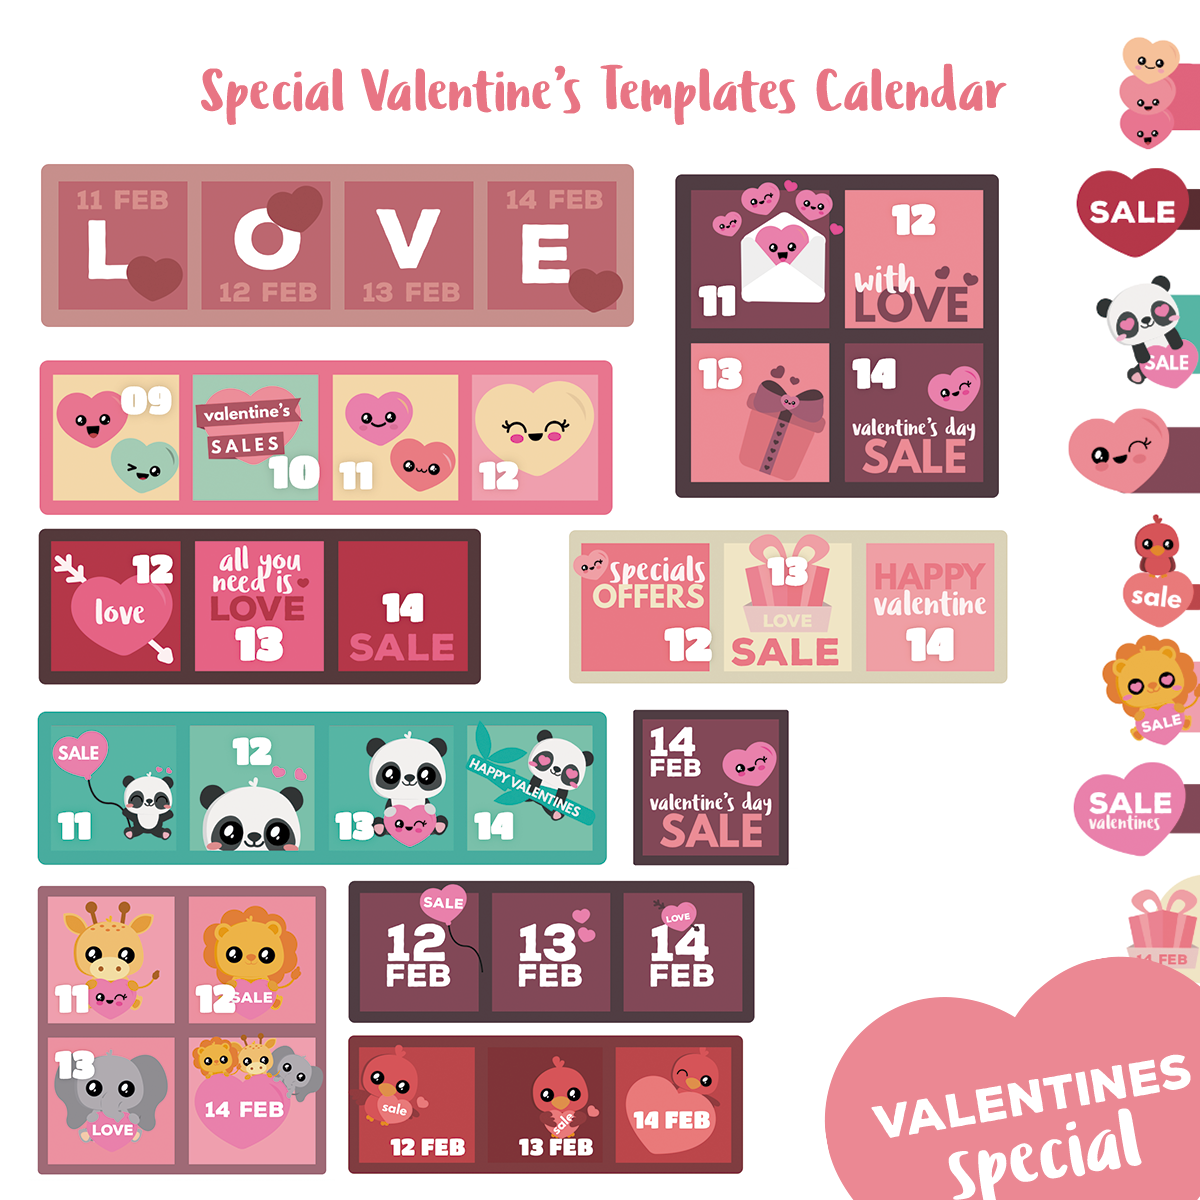 Deals Calendar - WordPress Plugin - Special Valentine